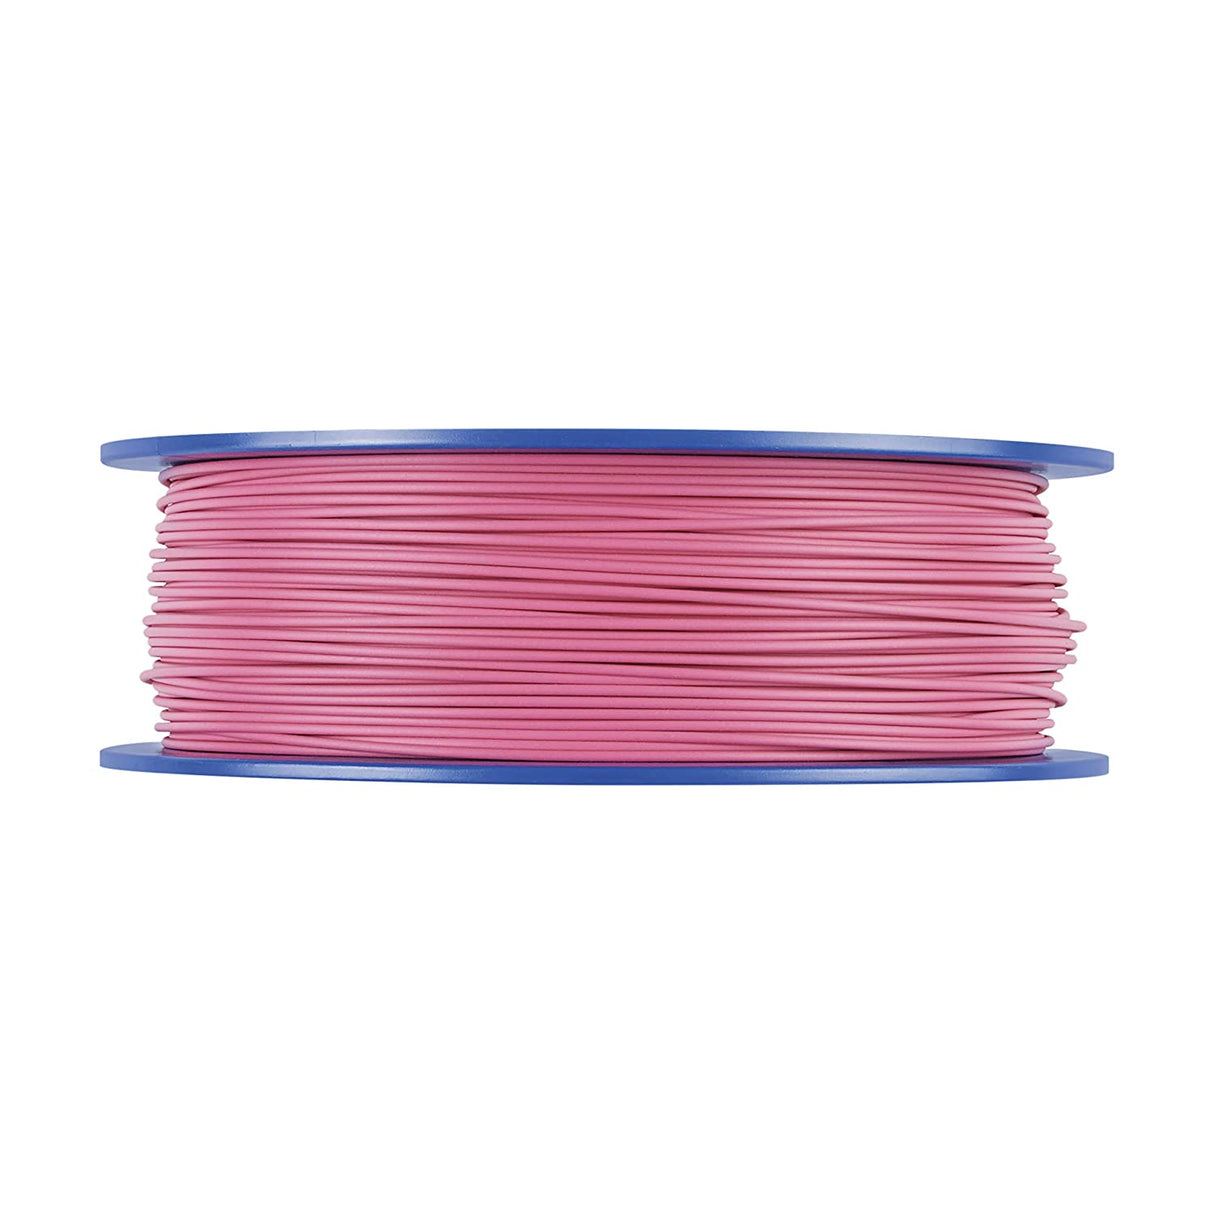 Dremel DigiLab PLA-PIN-01 3D Printer Filament, 1.75 mm Diameter, 0.75 kg Spool Weight, Color Pink, RFID Enabled, New Formula and 50 Percent More per Spool